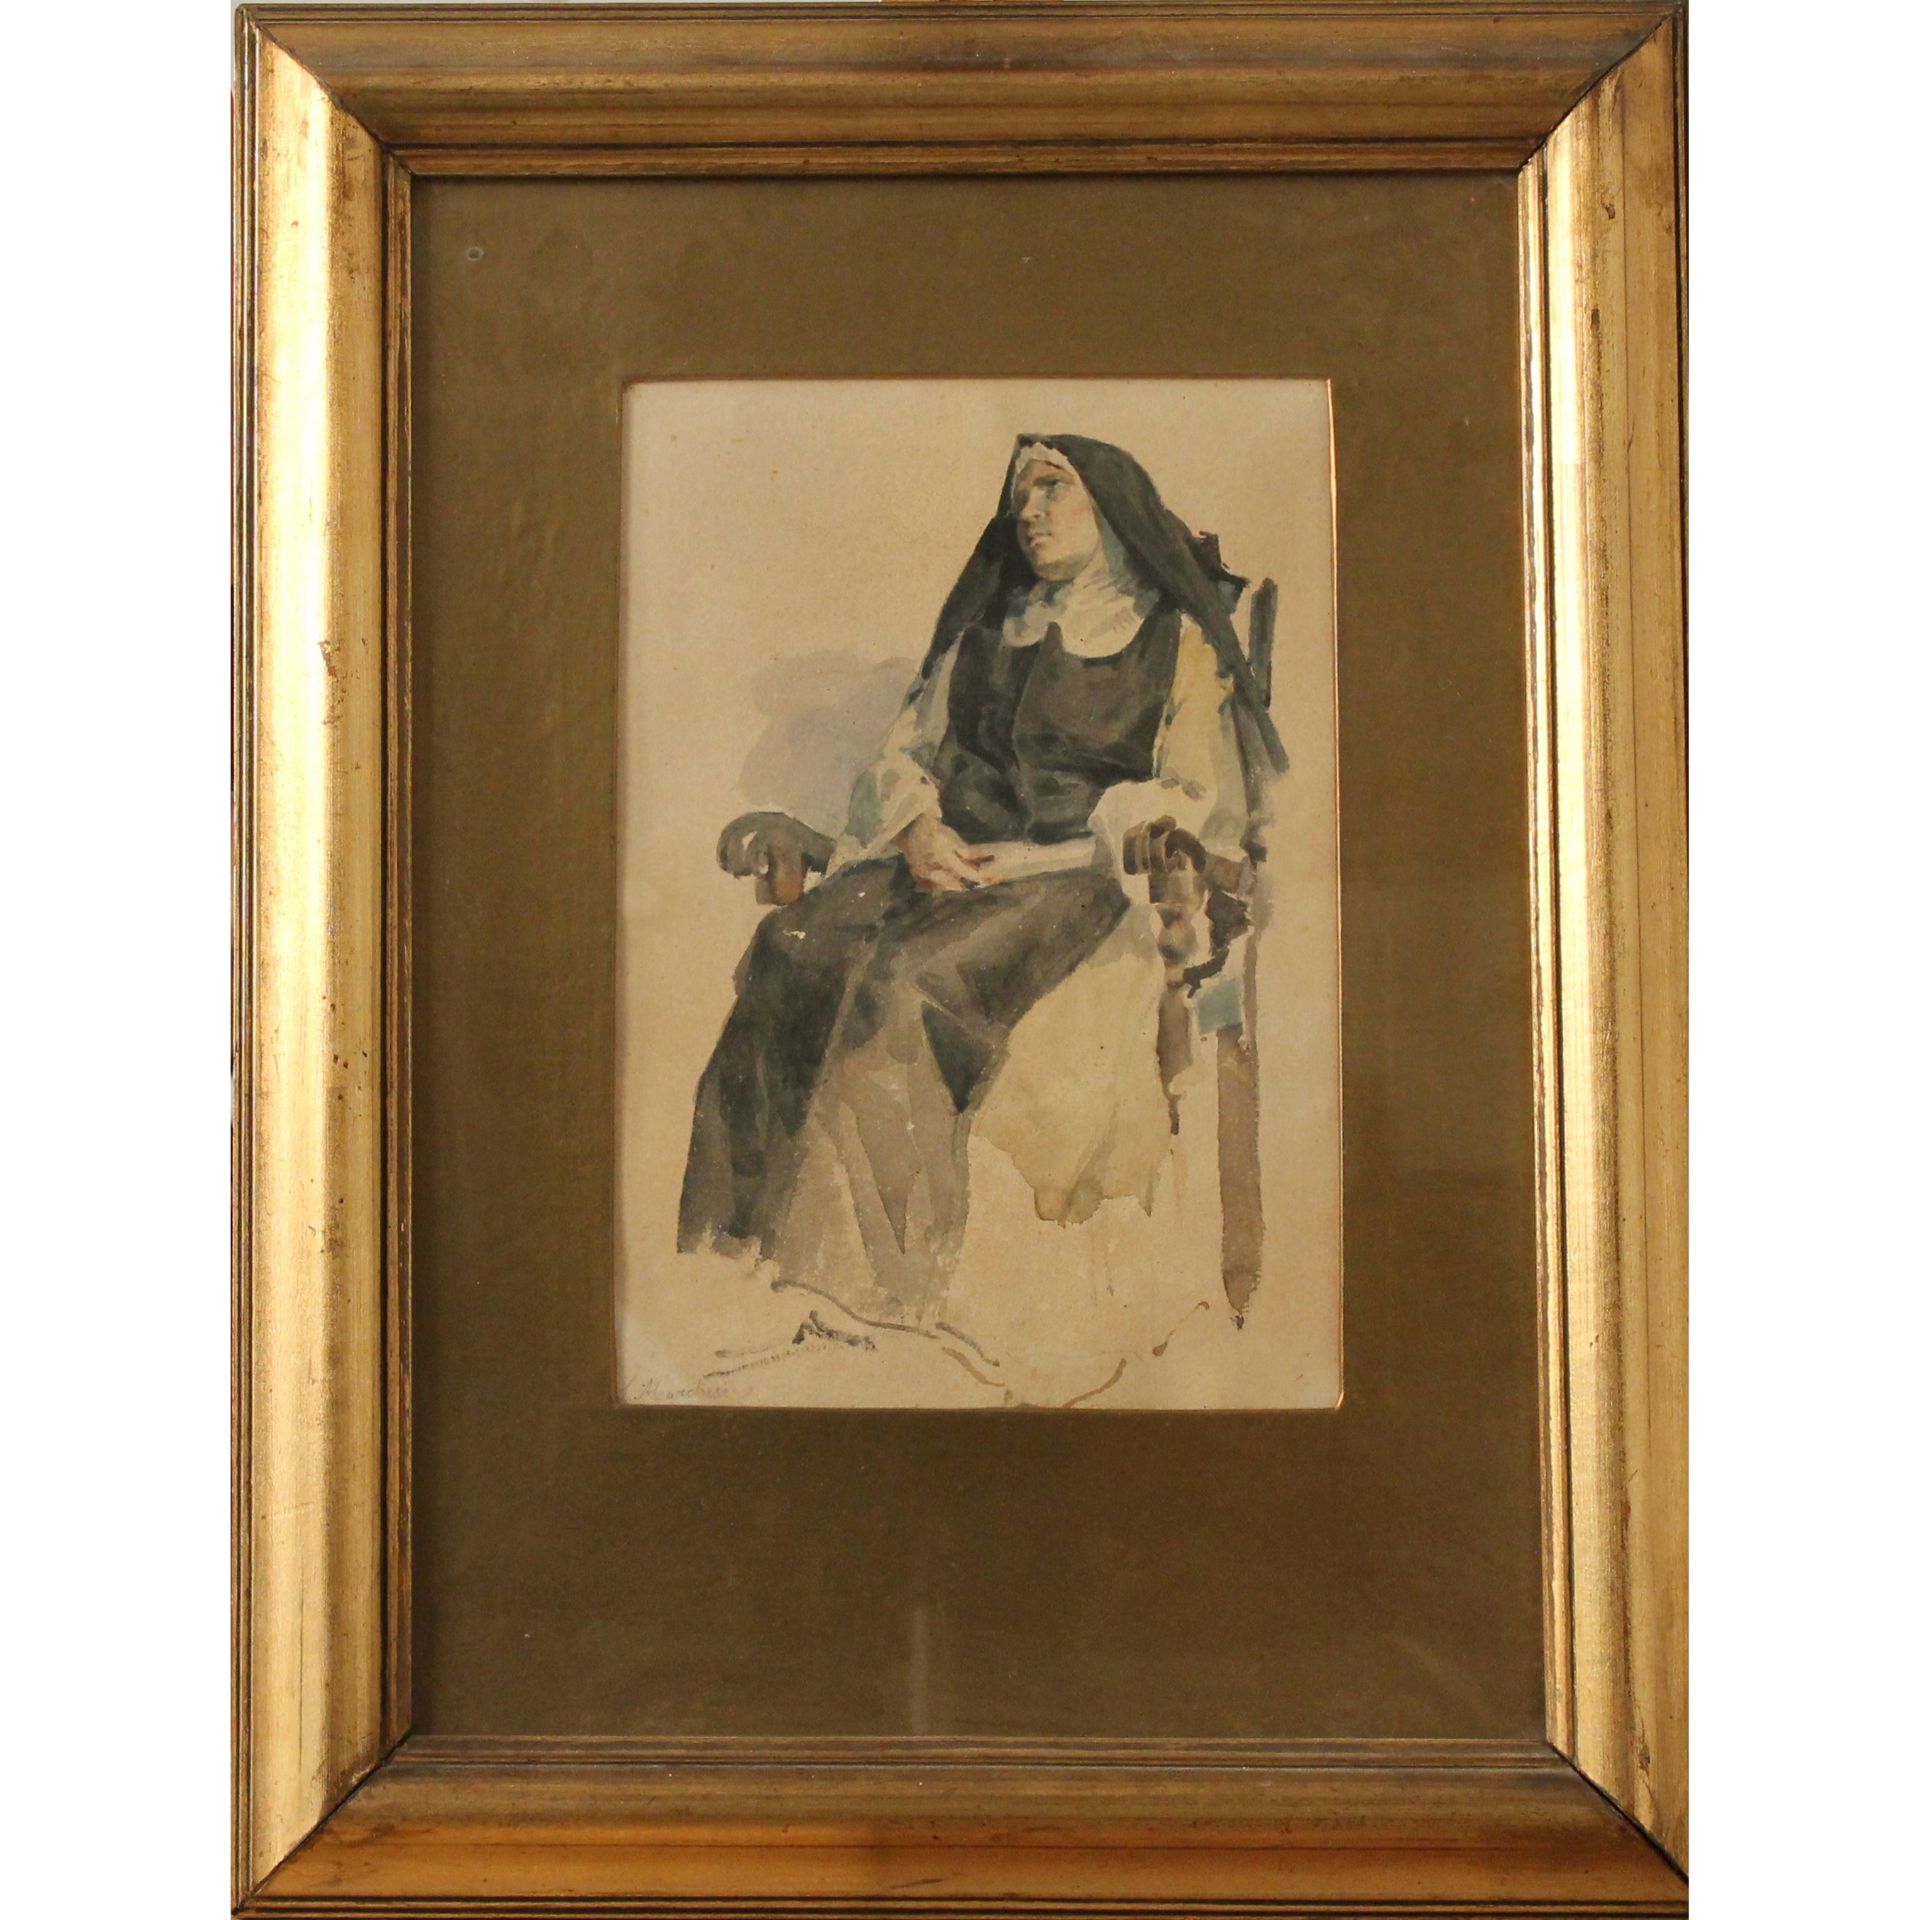 Salvatore Marchesi (1852/1926) "Suora seduta" - "Sitting Nun"